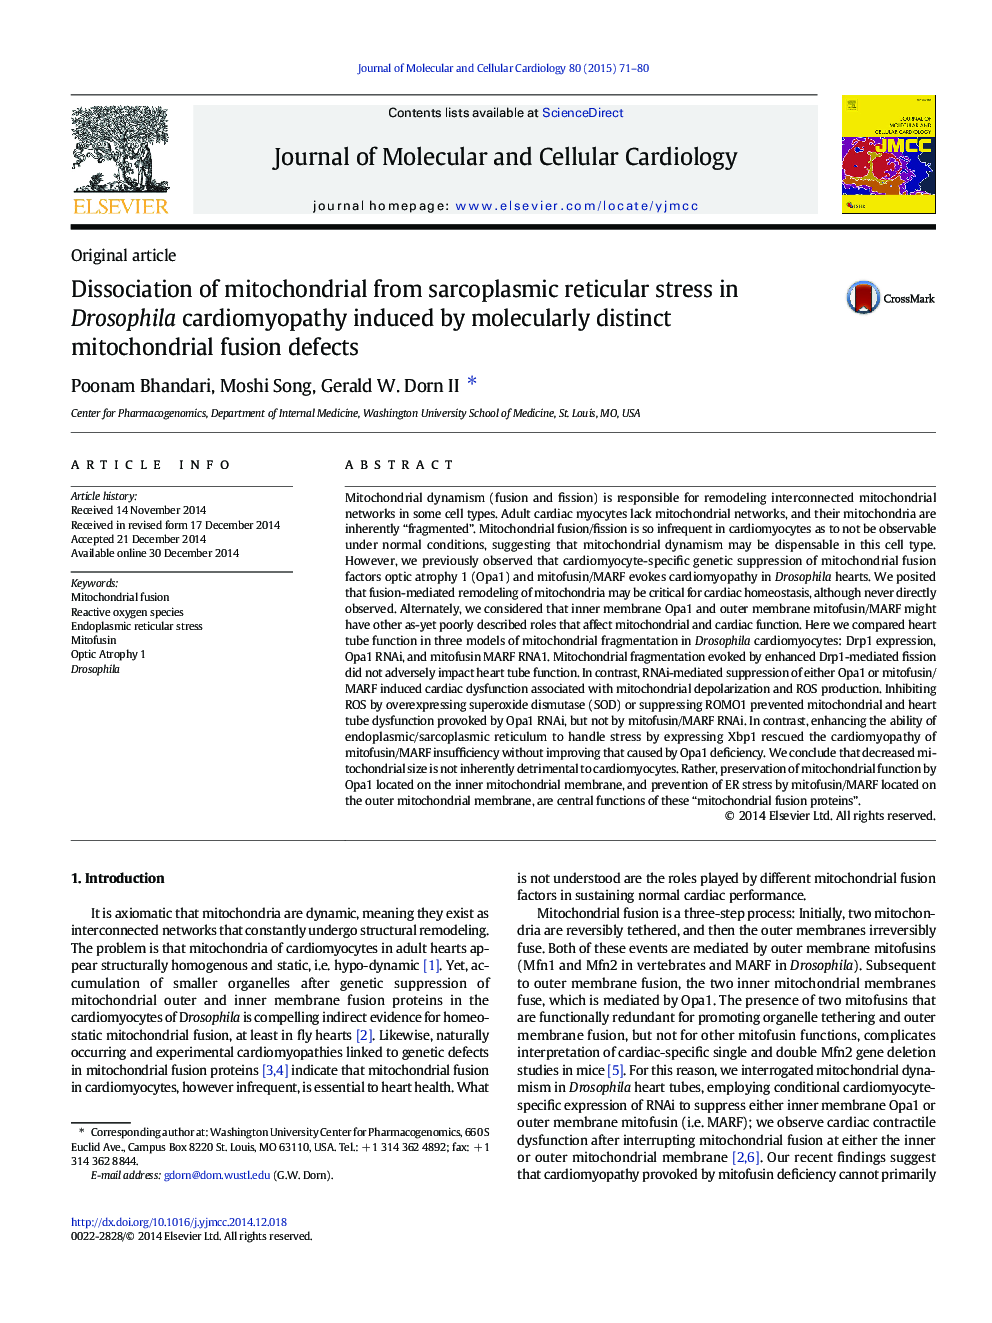 Dissociation of mitochondrial from sarcoplasmic reticular stress in Drosophila cardiomyopathy induced by molecularly distinct mitochondrial fusion defects